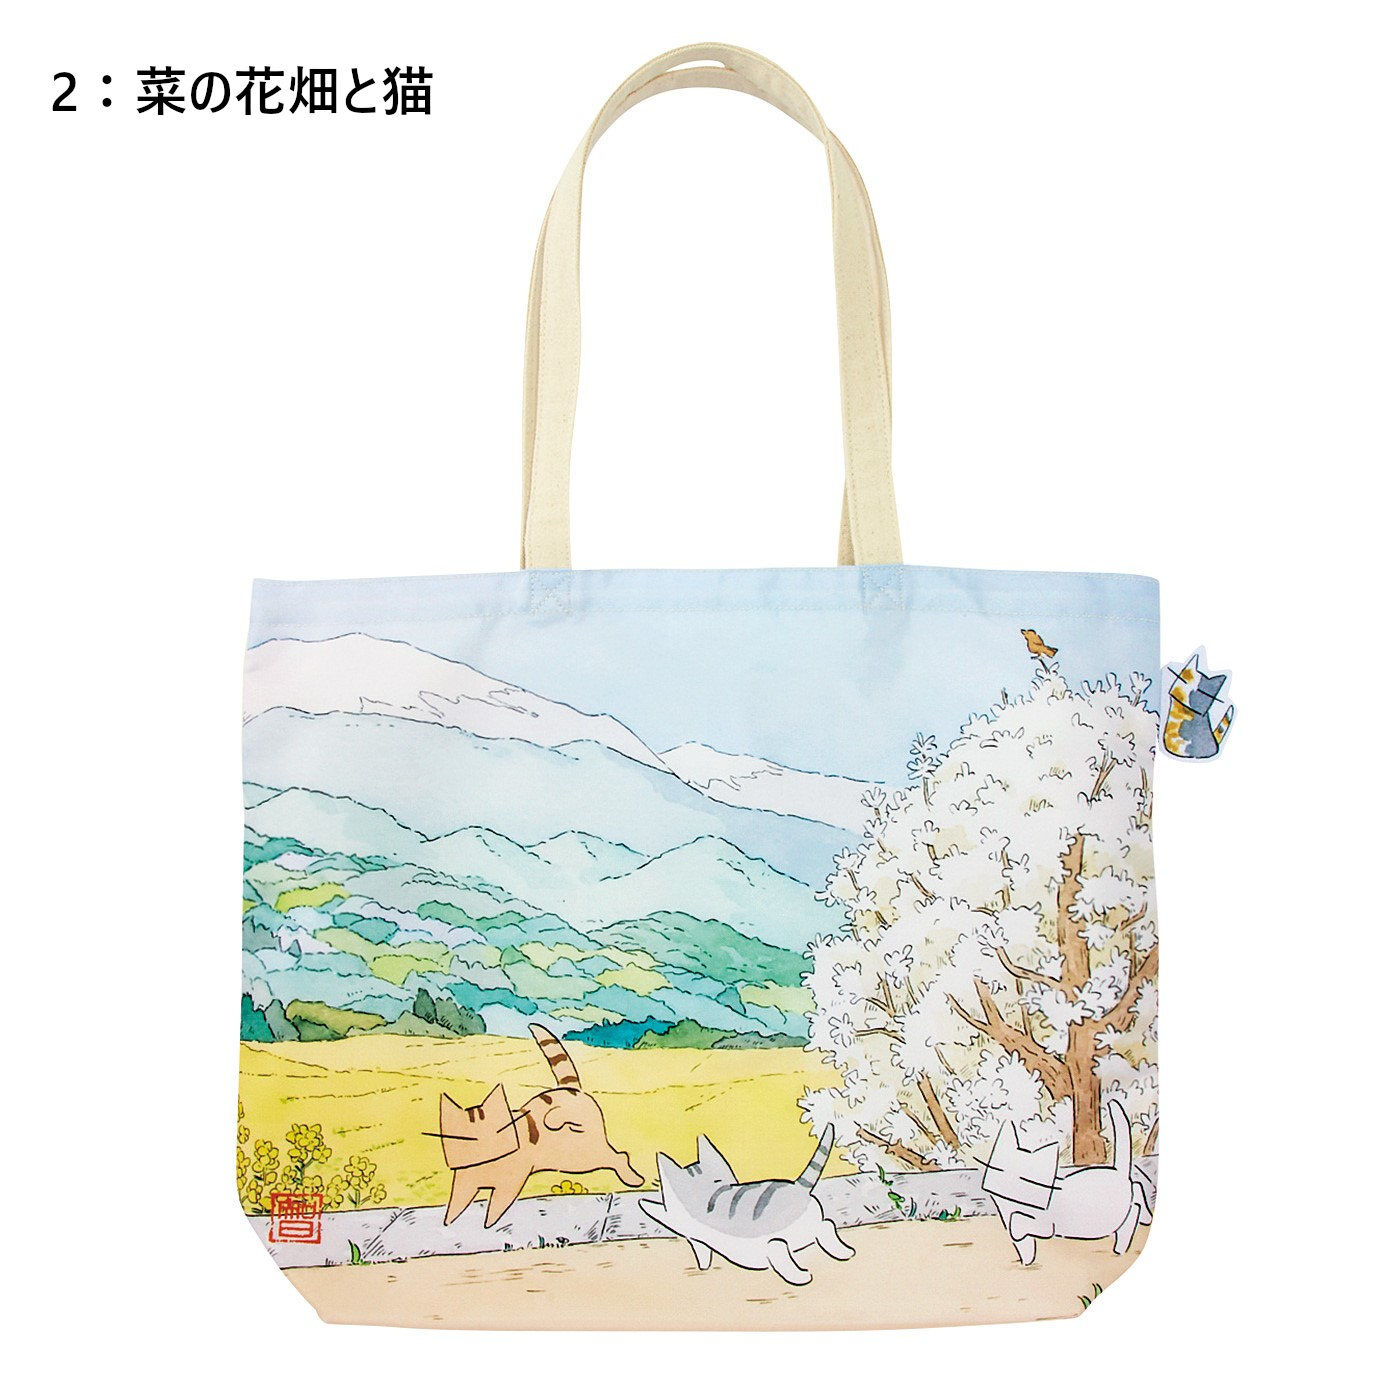 Real Stock|日本画家 久保智昭さんとつくった　猫とお花の季節のトートバッグ|〈菜の花畑と猫〉